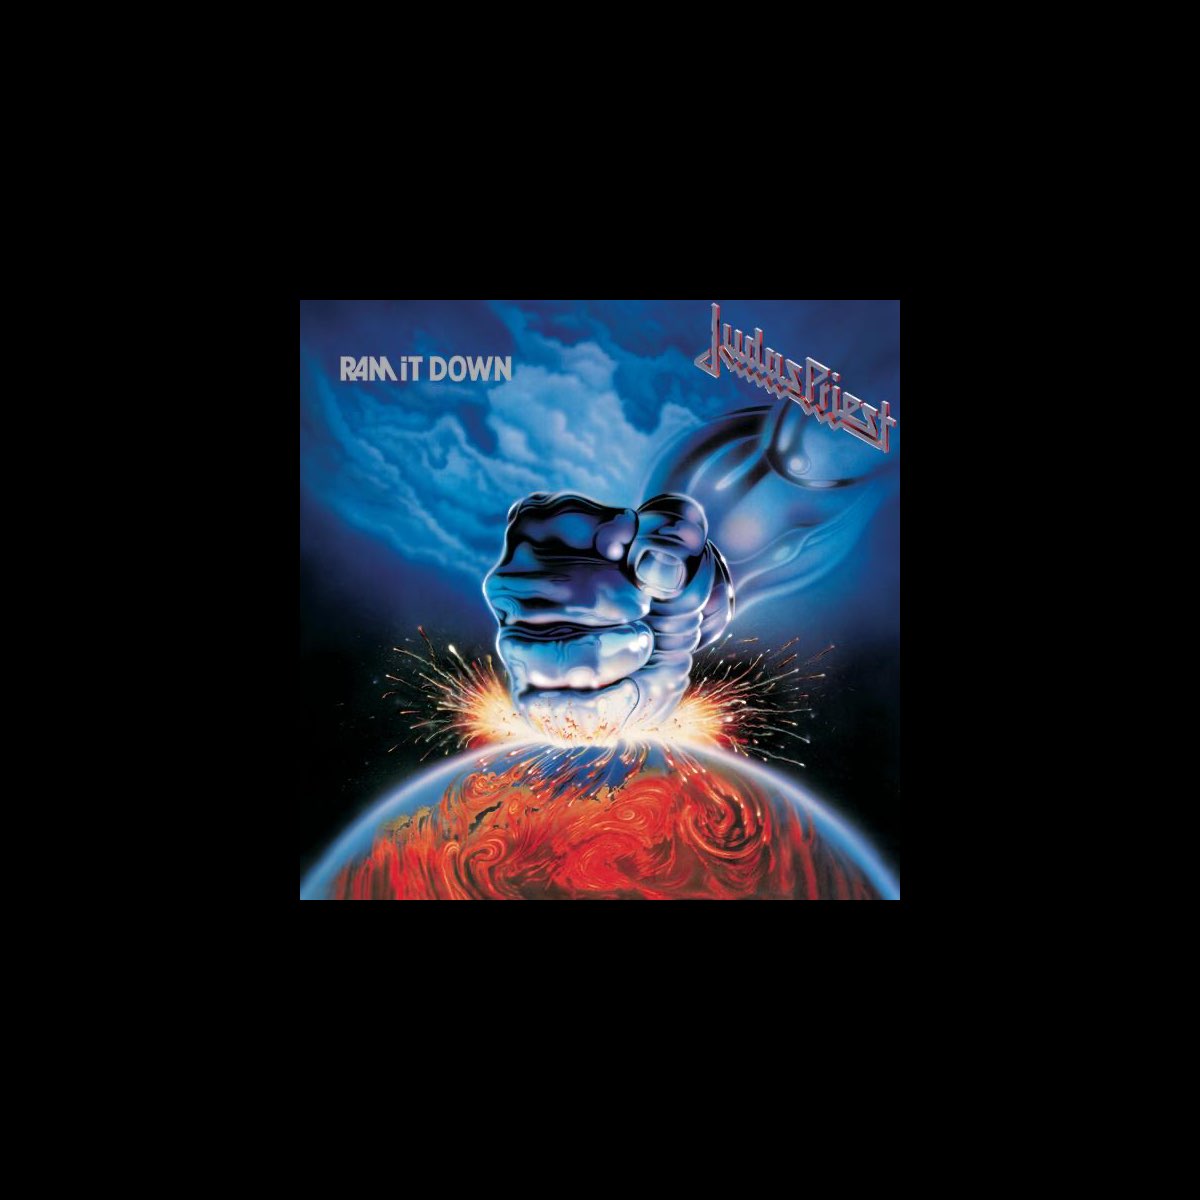 Ram It Down (Bonus Track Version) by Judas Priest on Apple Music